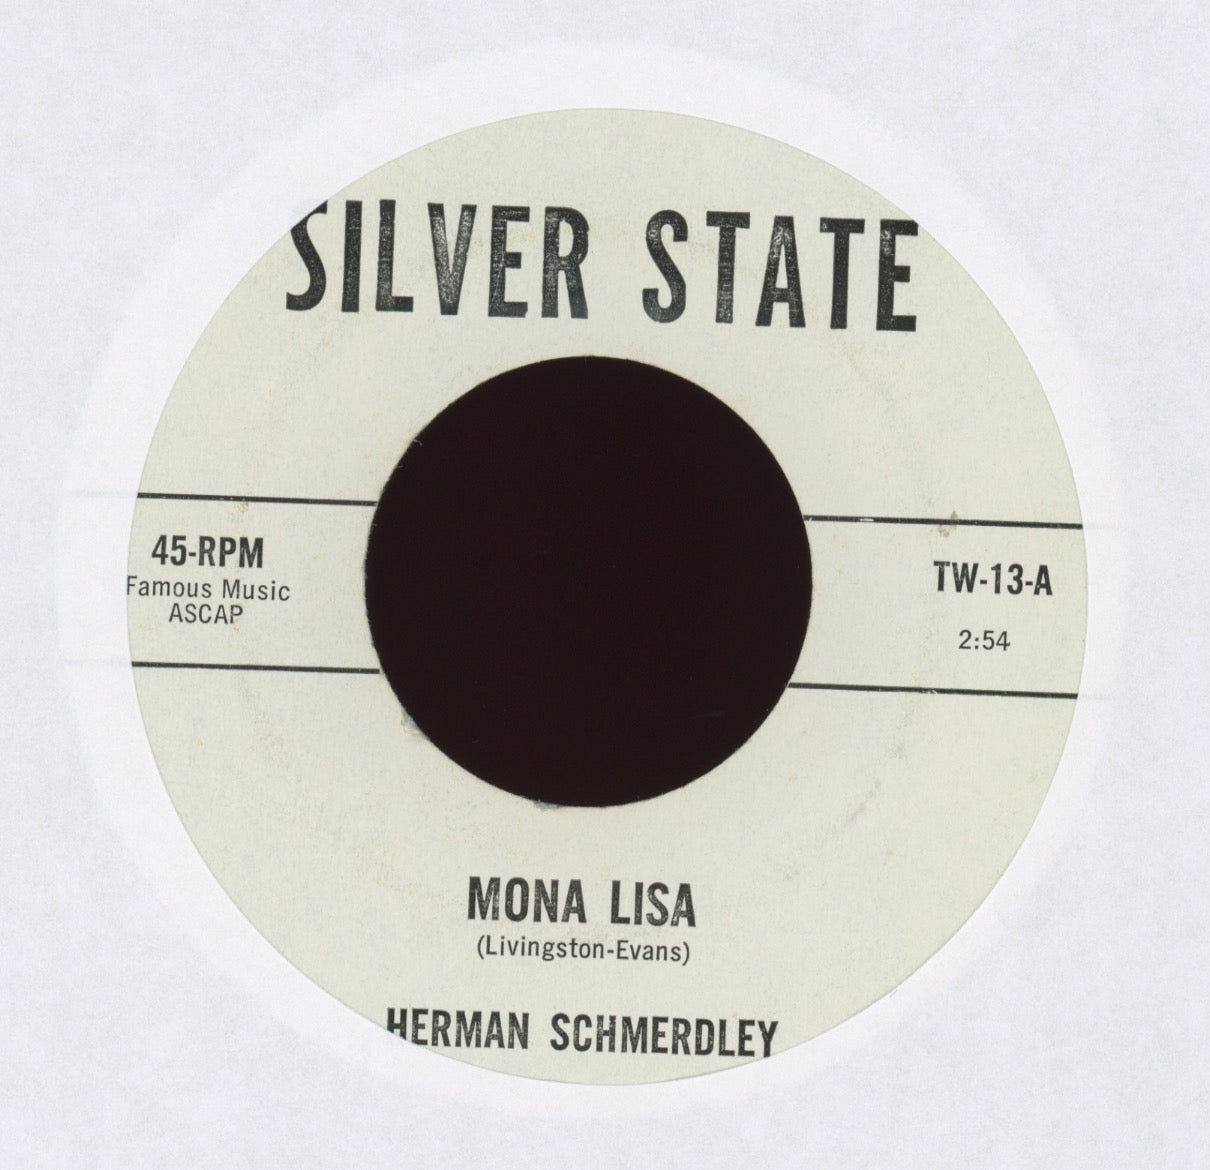 Herman Schmerdley - Mona Lisa on Silver State